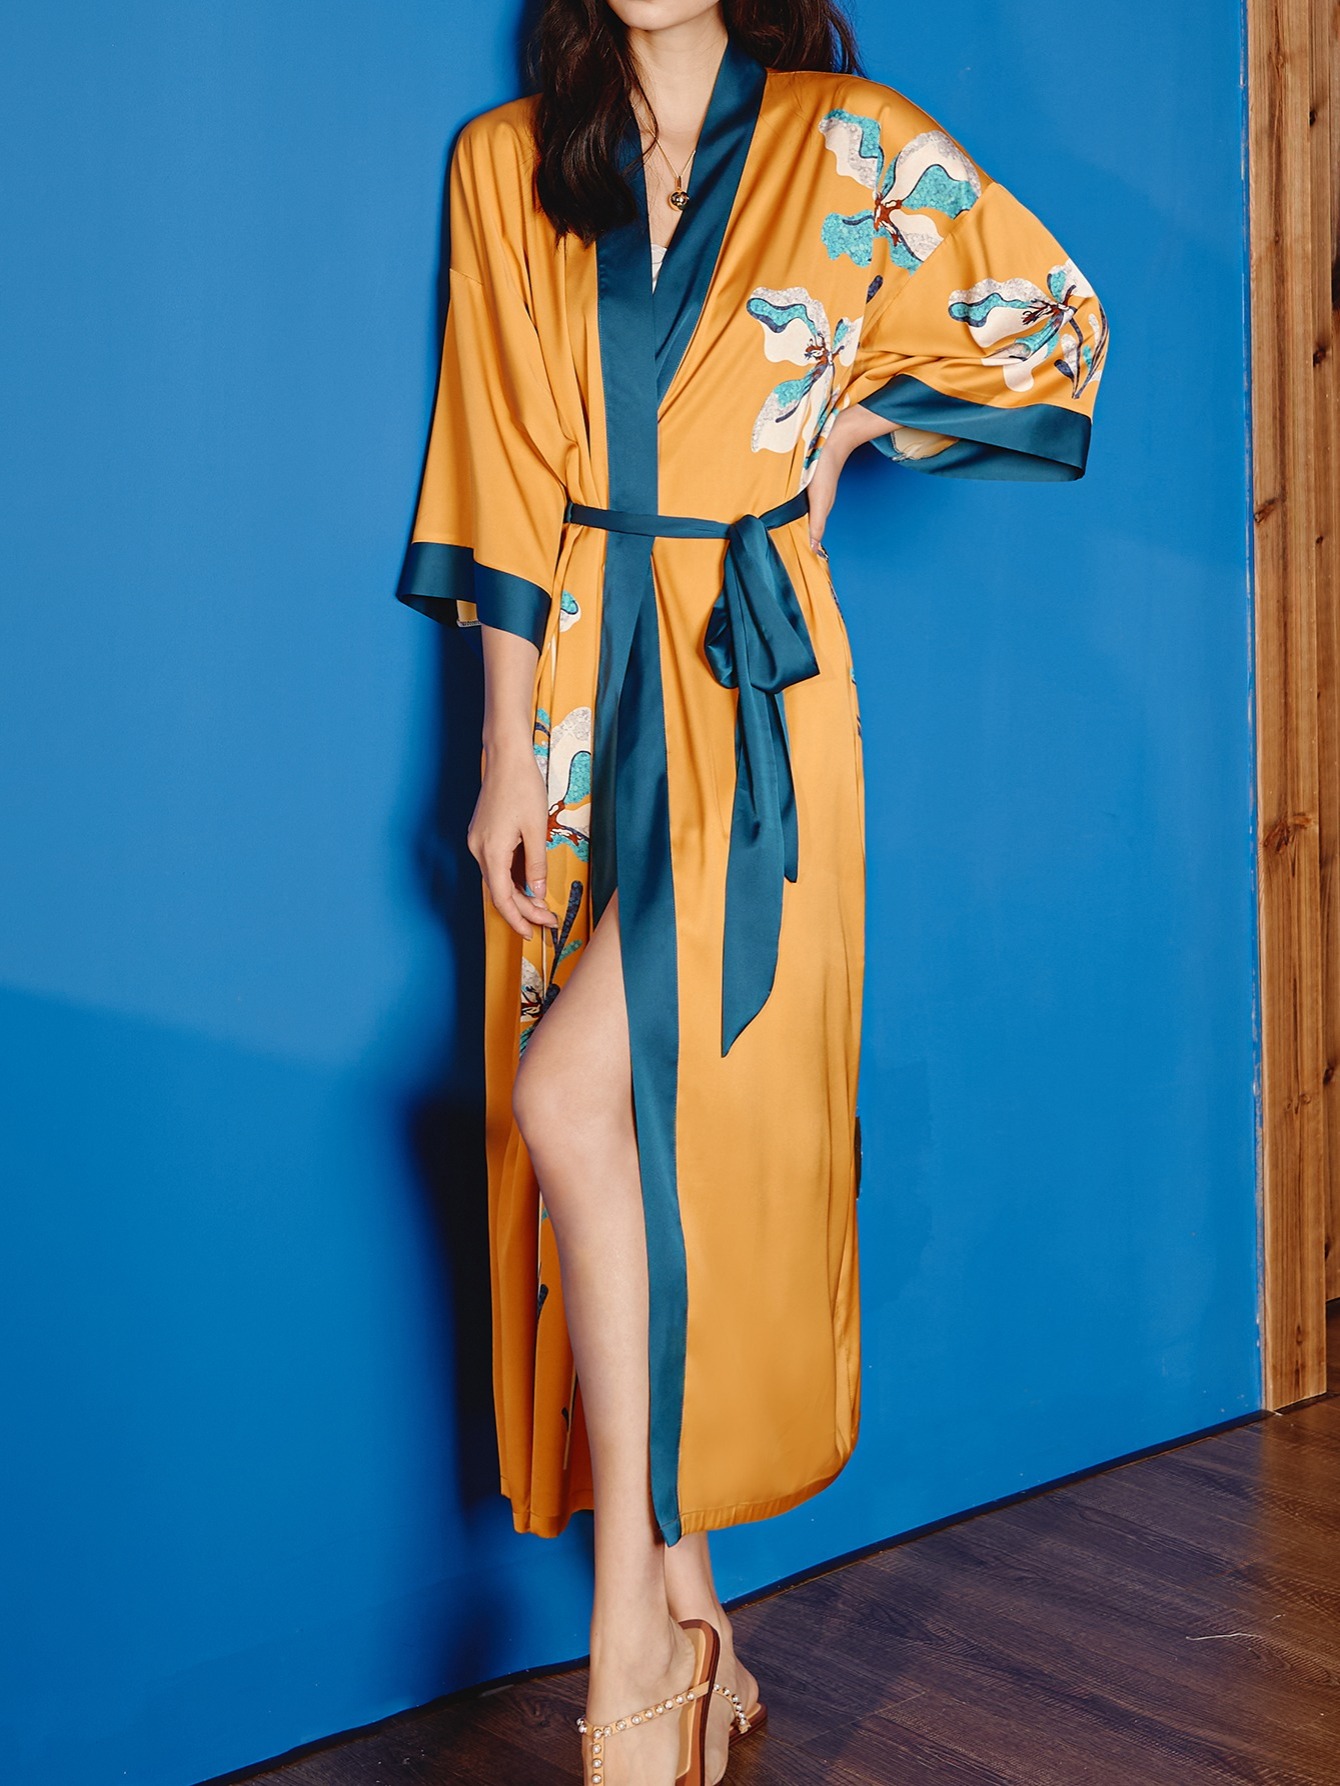 Floral Satin Nightgown Robe Sets Women Slip Dress Built-in Bra Pads  Nightwear Lingerie Long Sleeve Robe Sleepwear (Color : A, Size : S Code) (A  S Code) : : Home